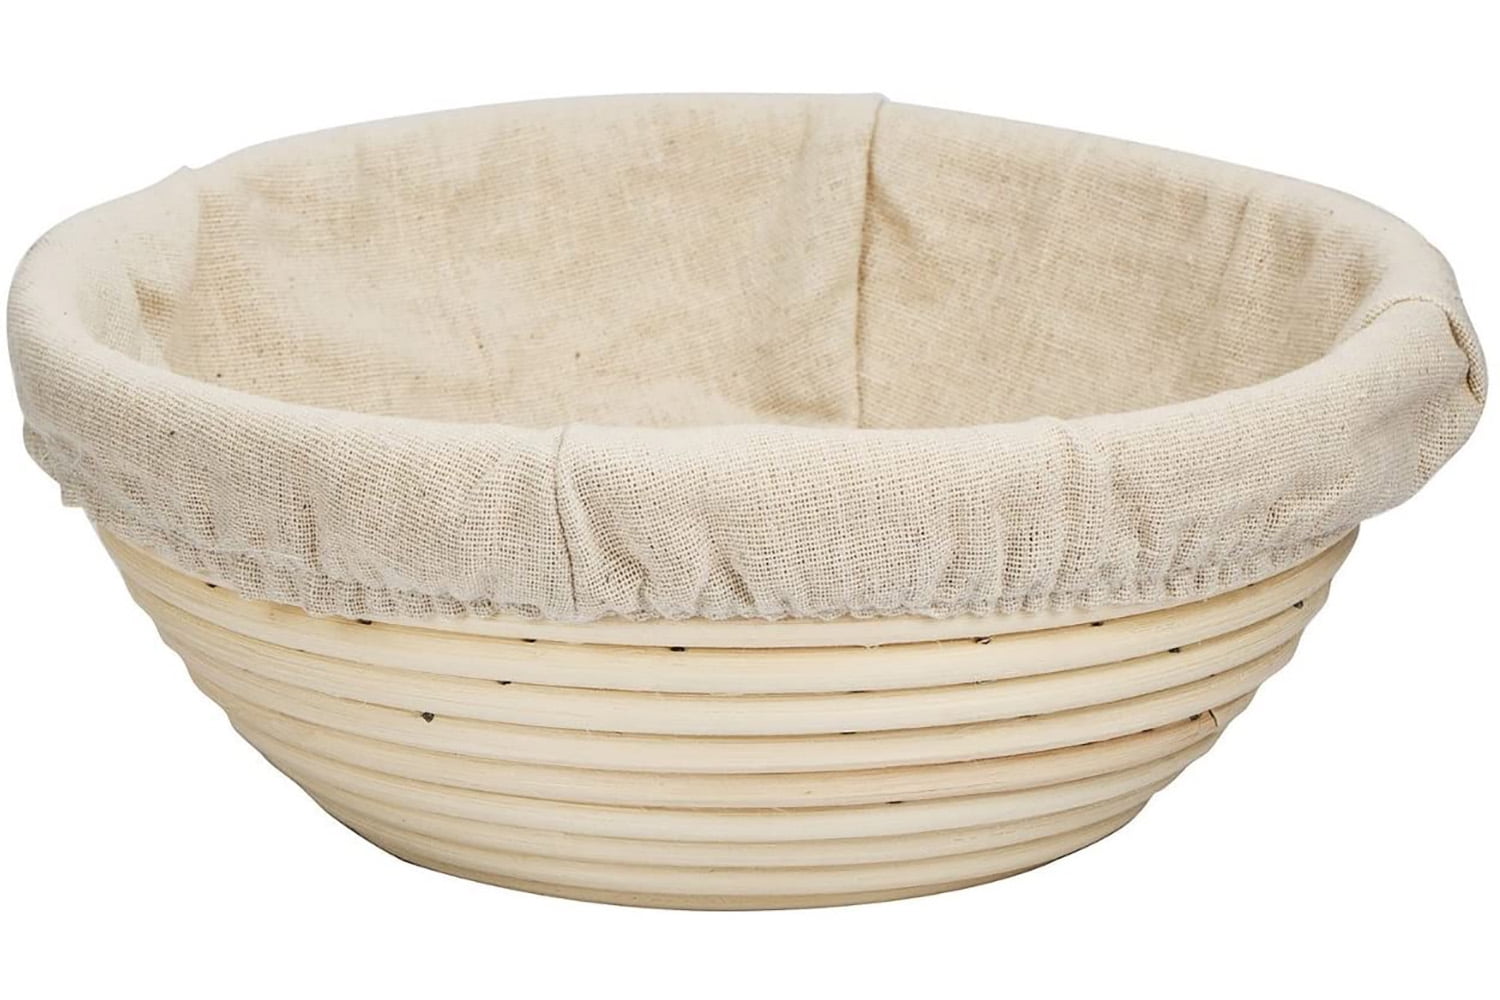 Round Bread Rattan Basket Banneton Brotform Dough Rising Baskets Baking Acces 